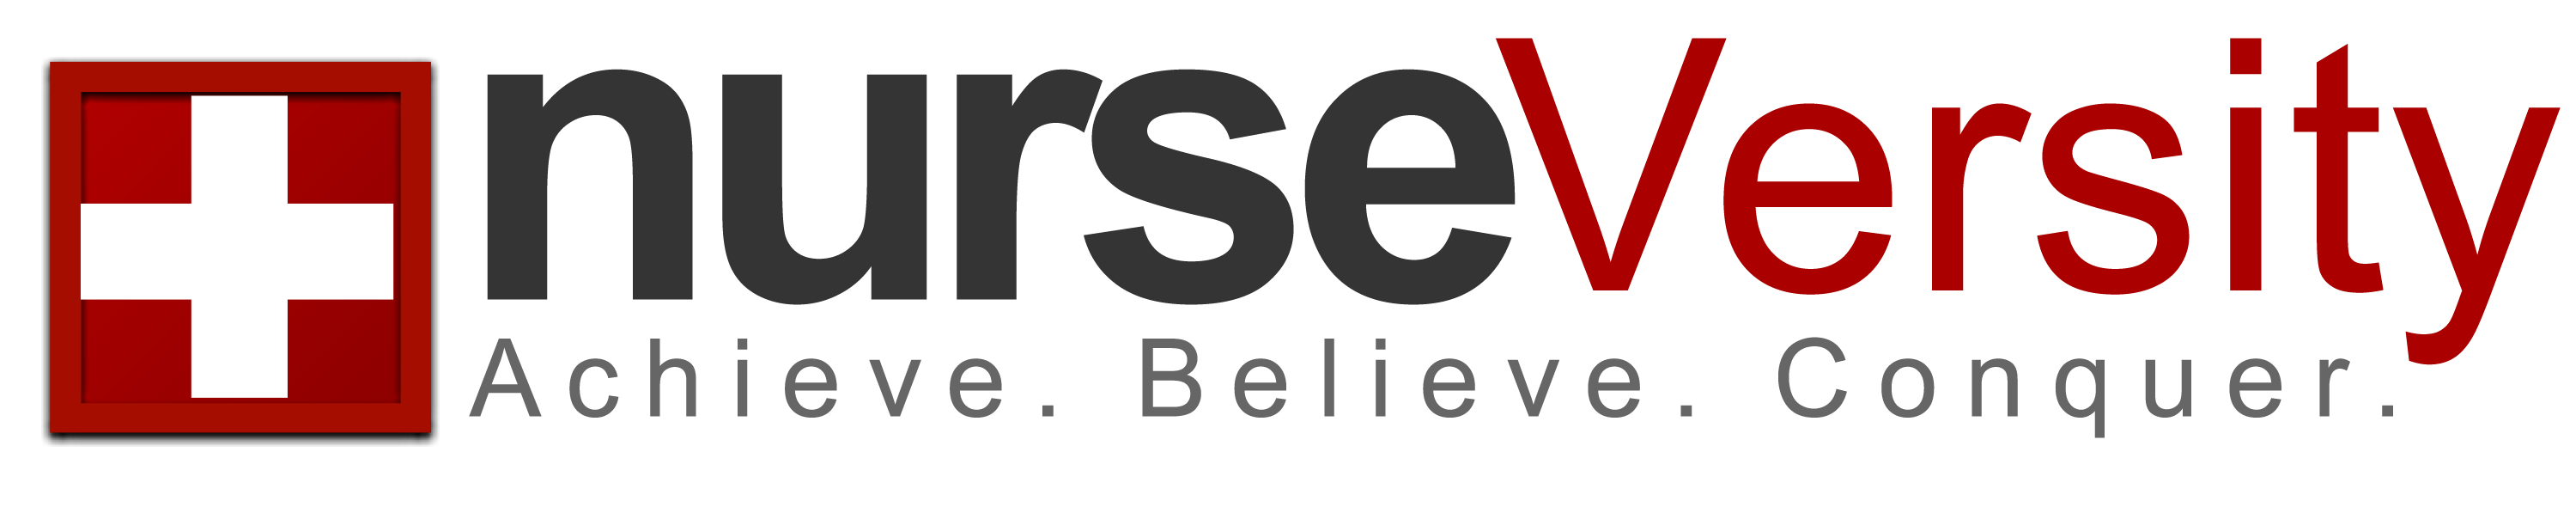 nurseVersity, LLC Logo